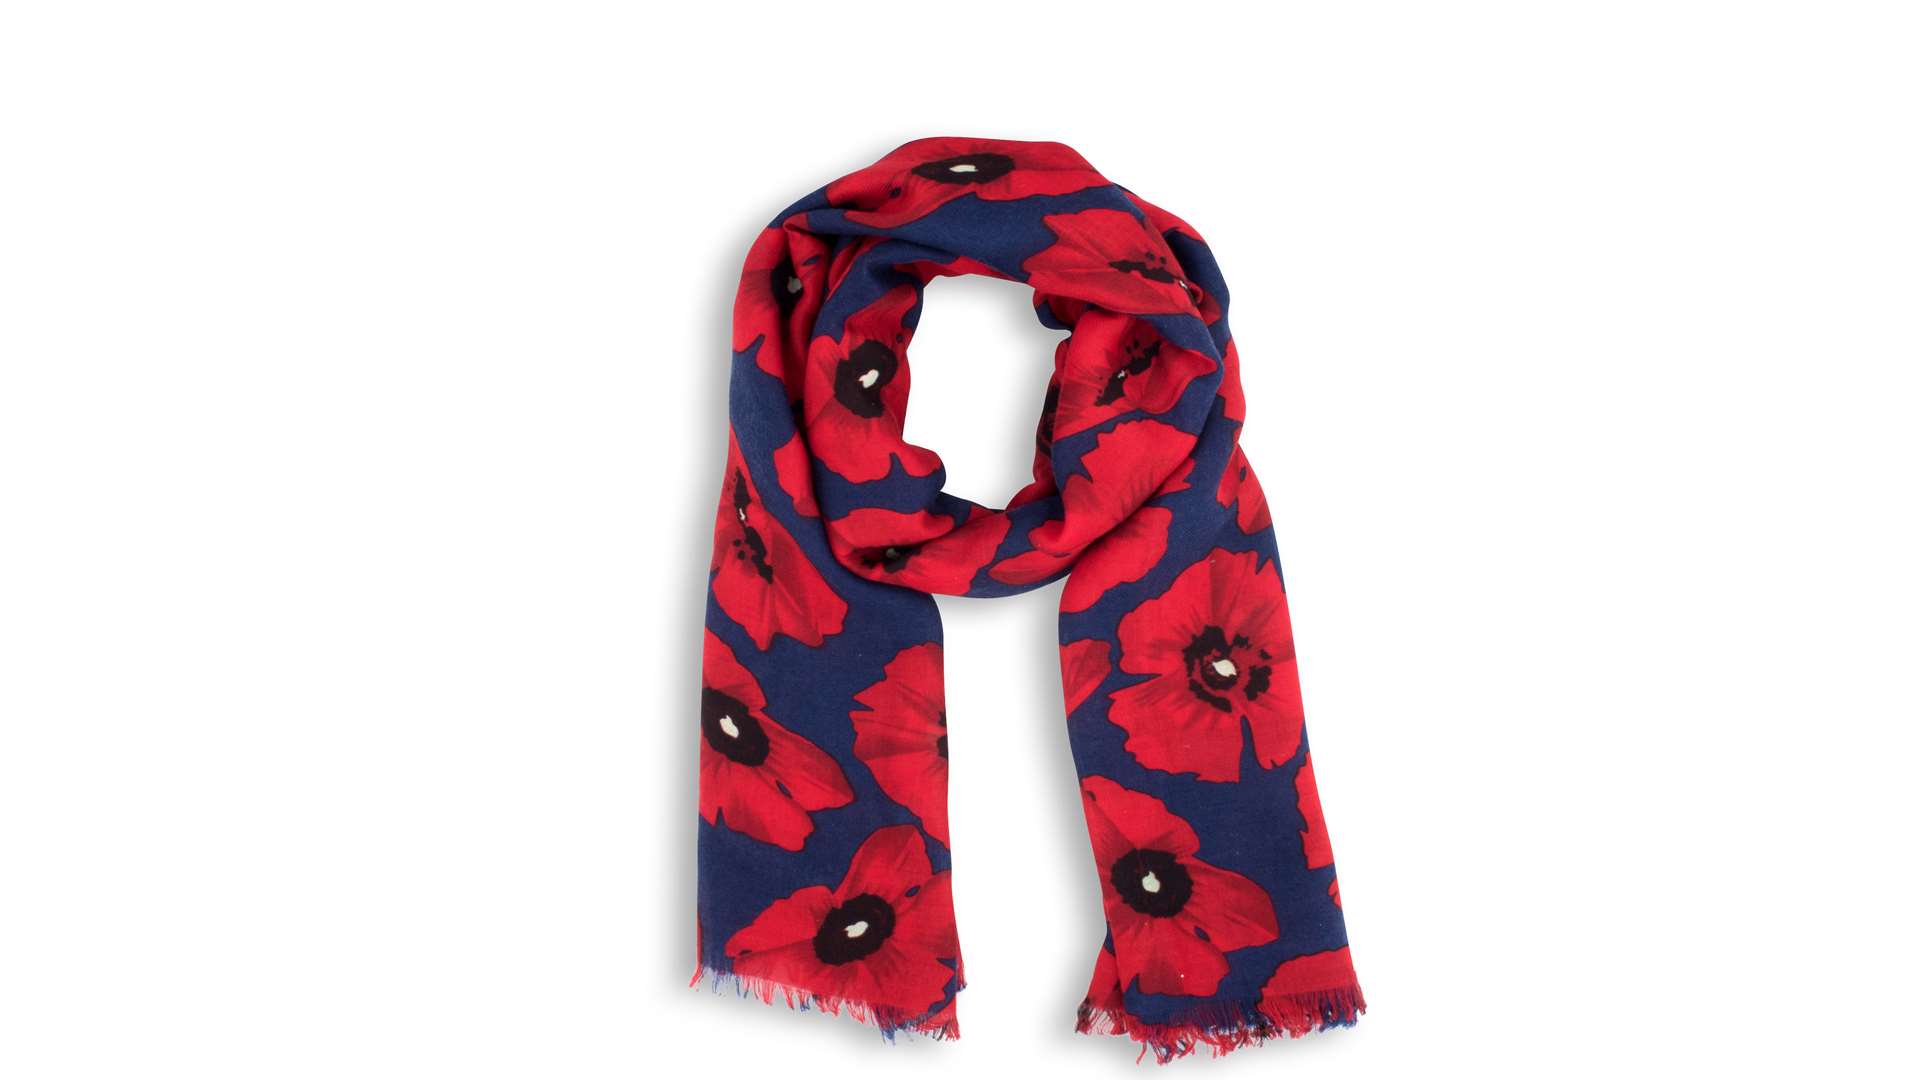 Poppy scarf from the Royal British Legion